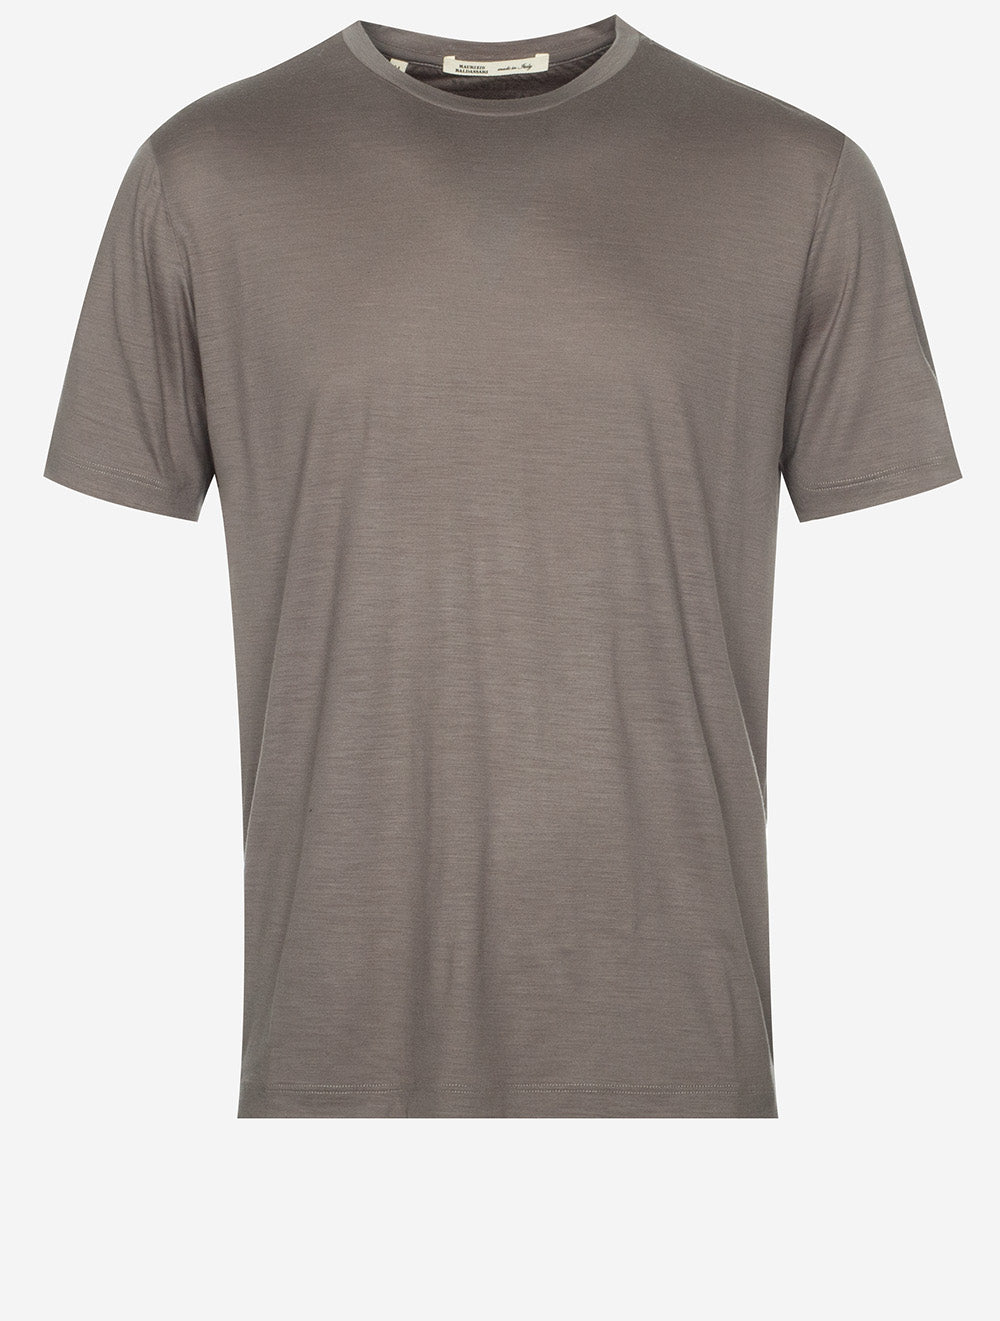 T-Shirt Short Sleeves Light Grey Brown